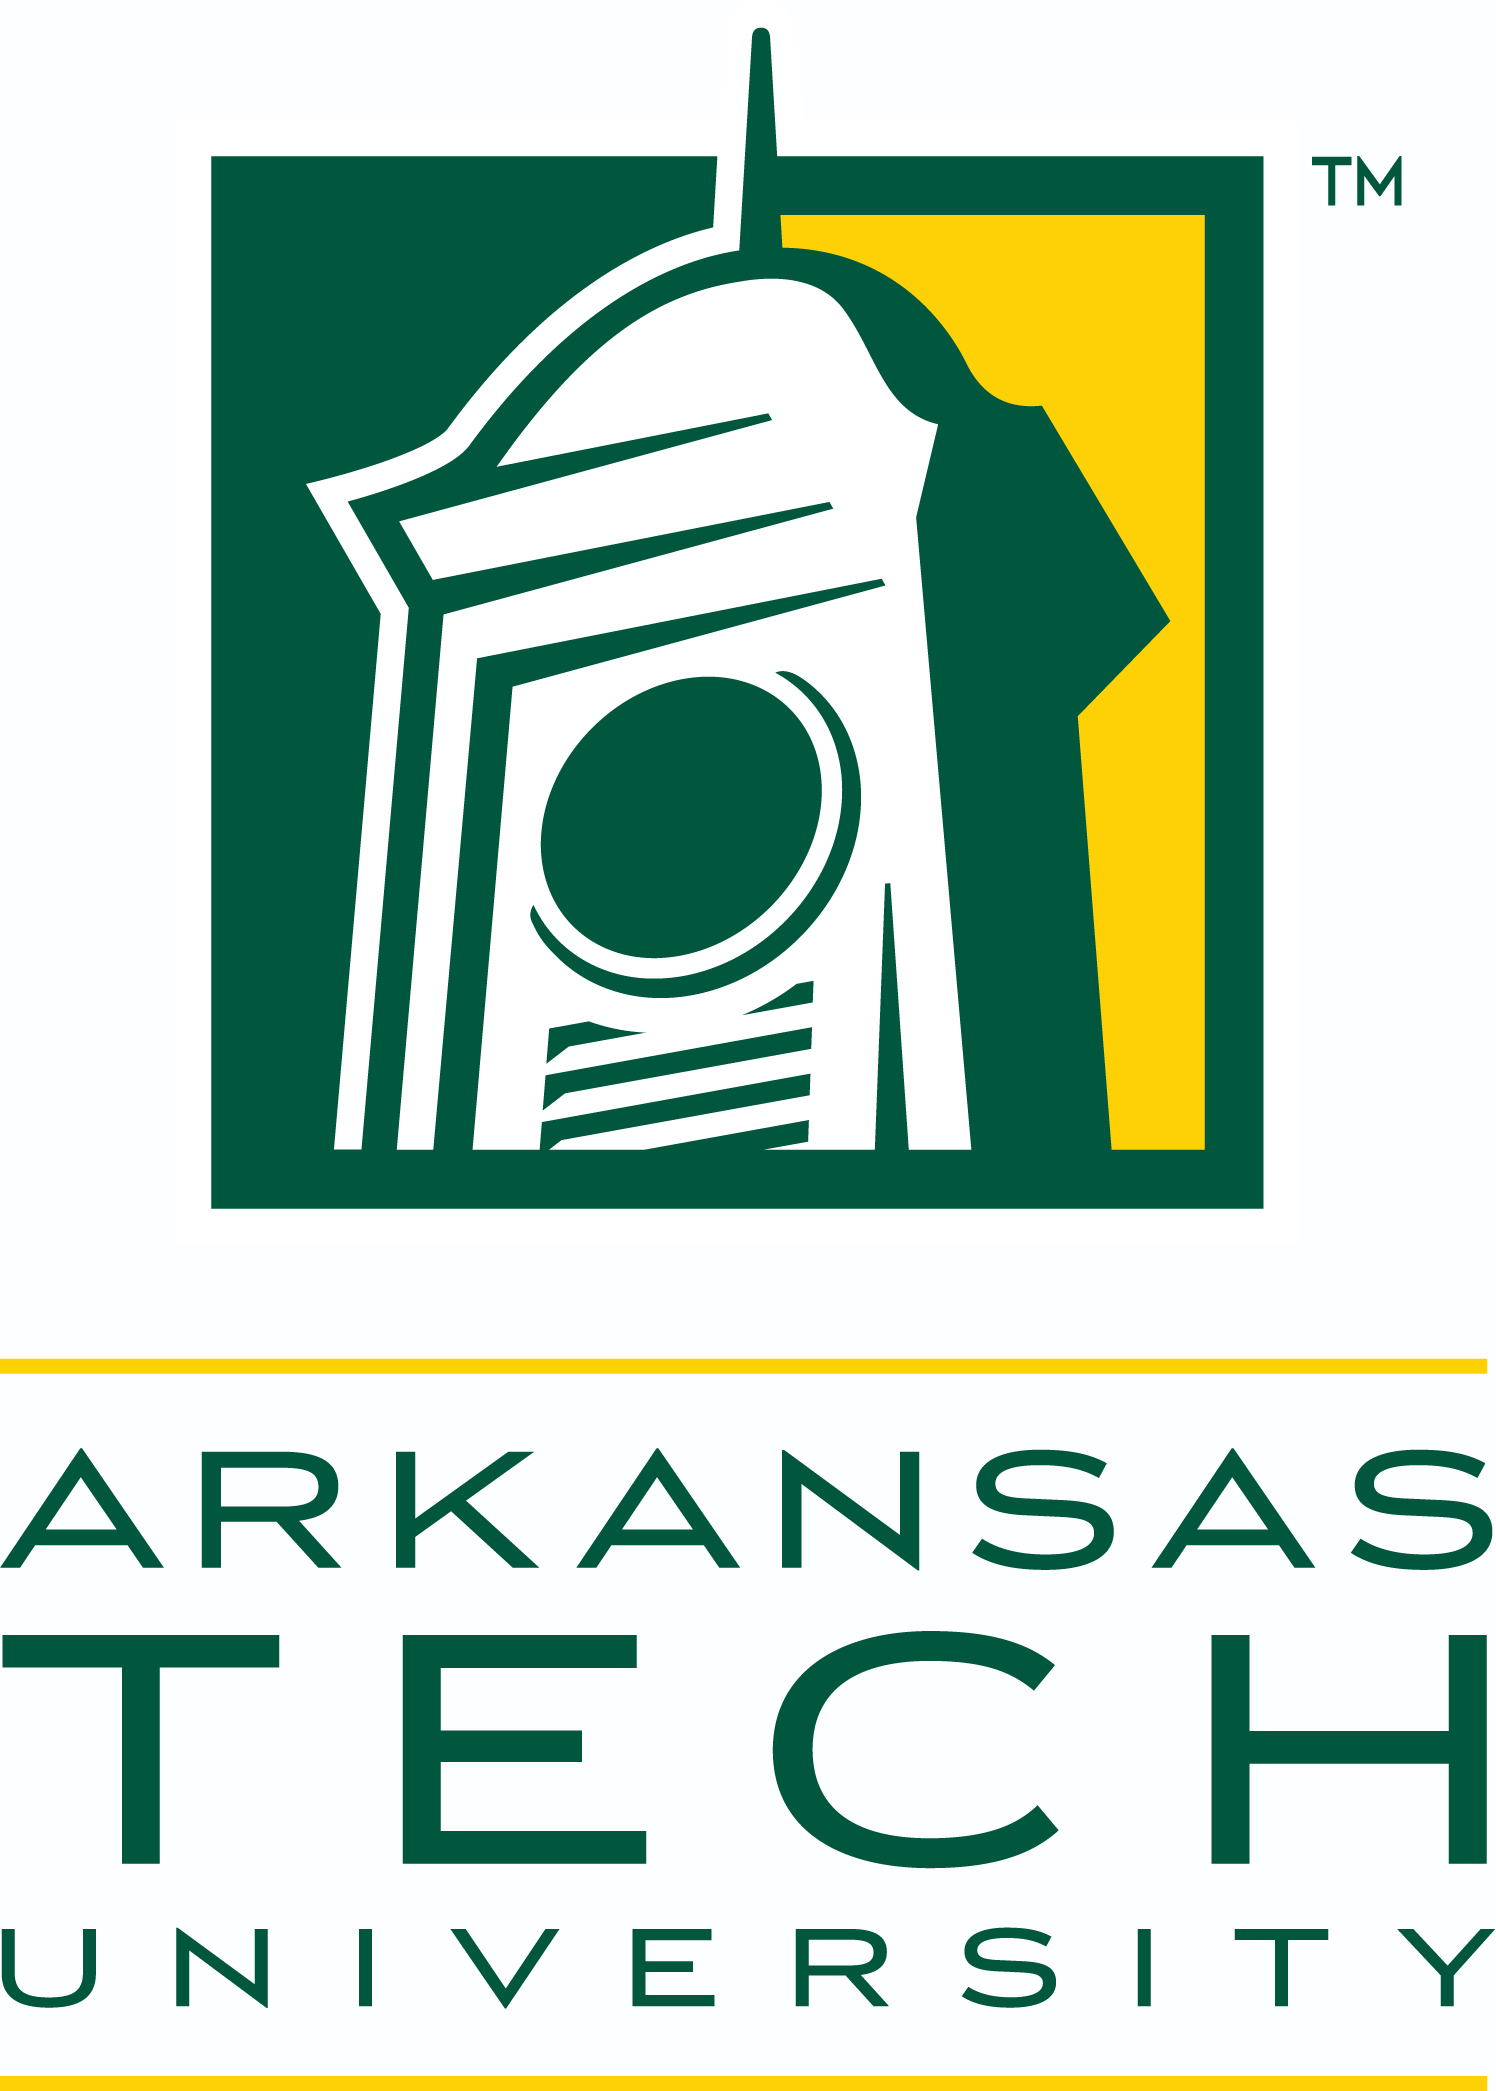 Arkansas Division of Higher Education